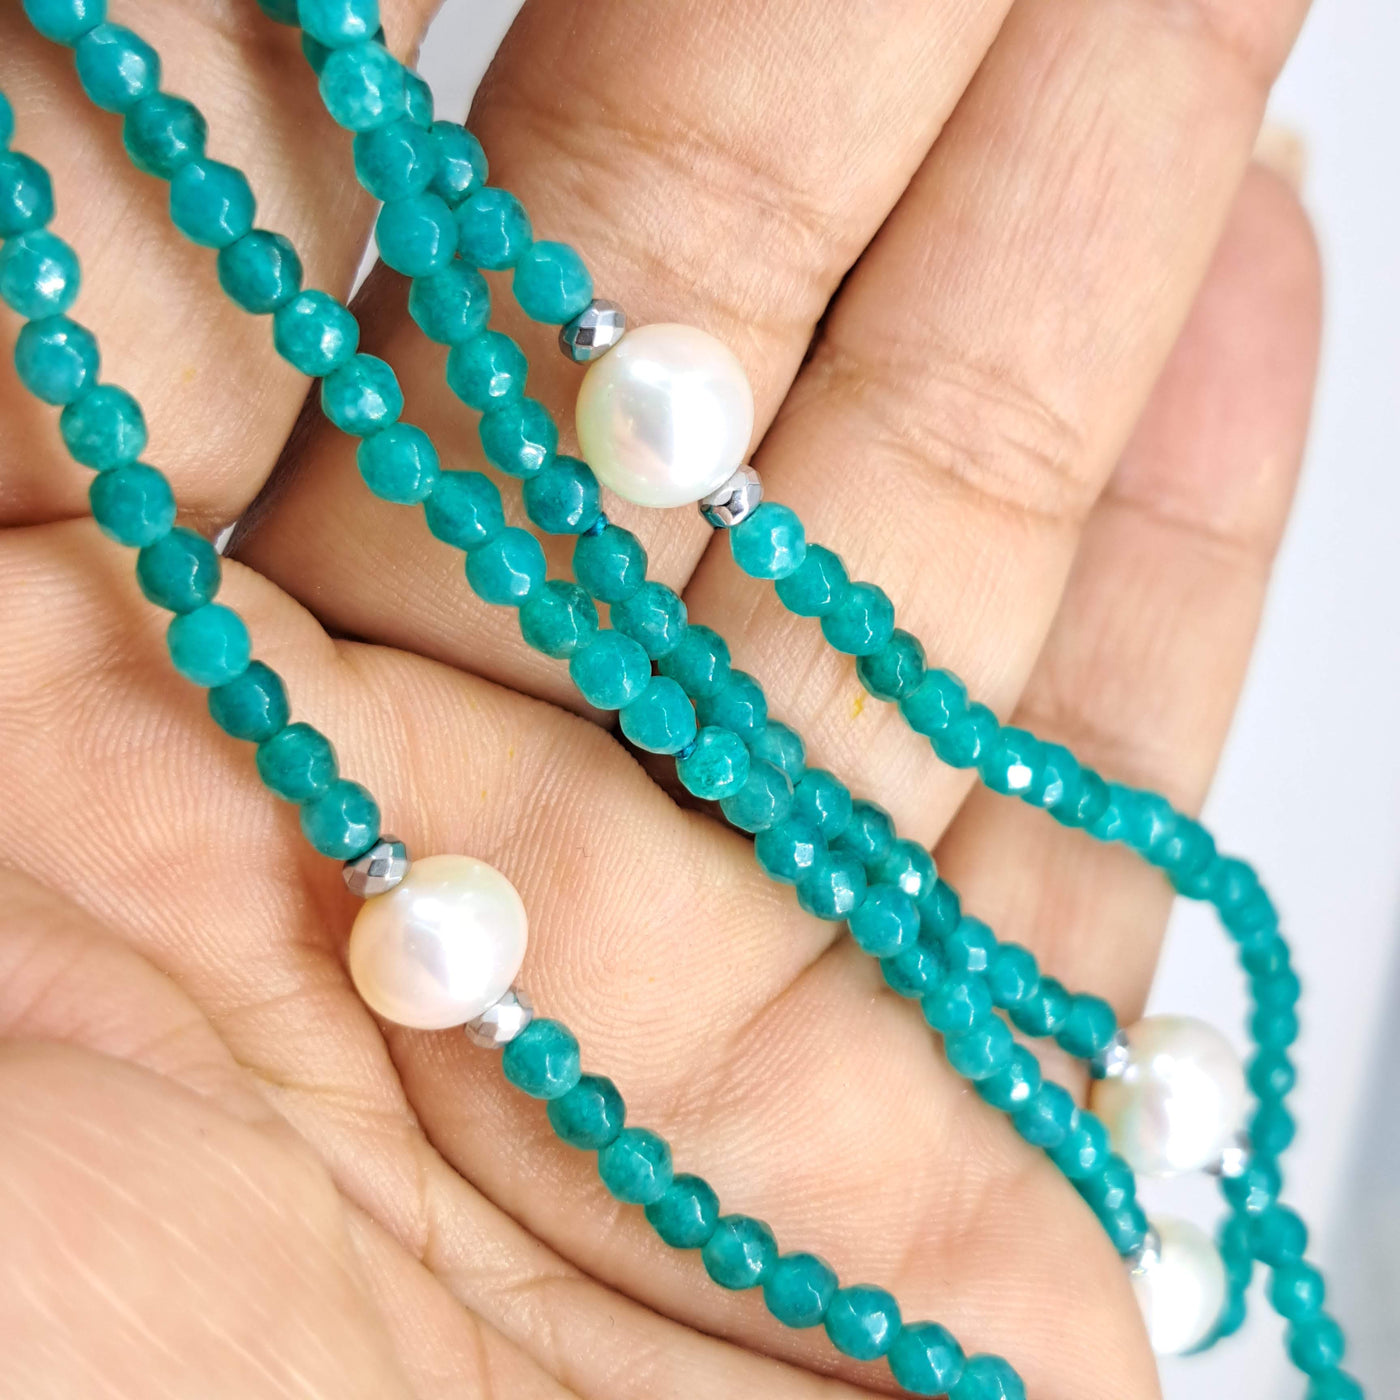 "60 Inches Of LOVE!" 60" Necklace/Bracelet Convertible - Gemstones, Pearls, Hematite (+ SP Enhancer Clip)